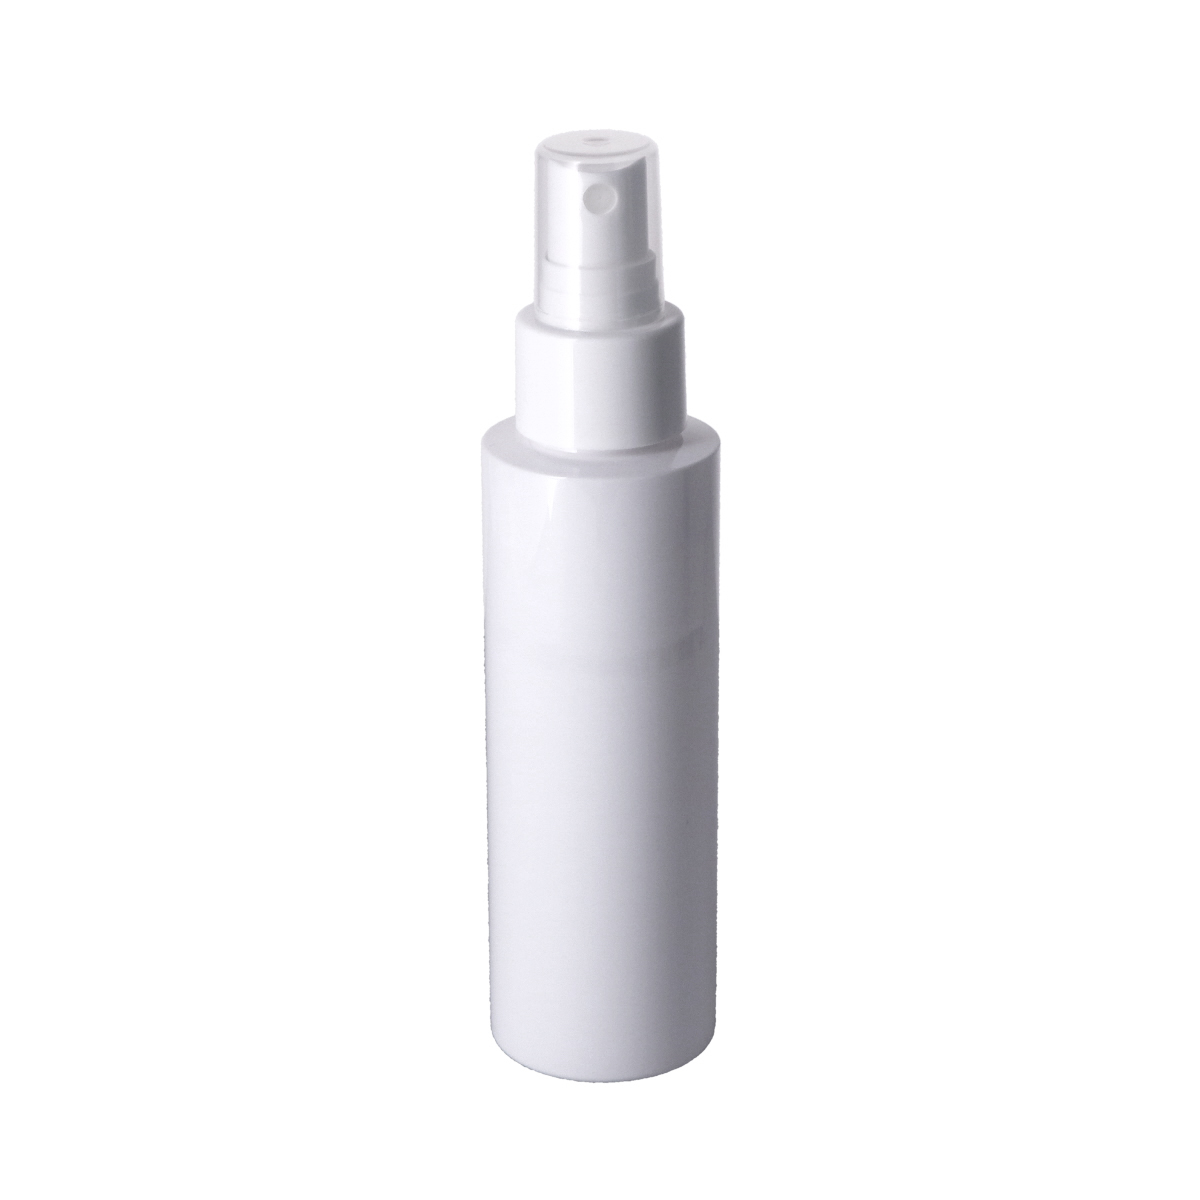 Sprayer Pumps,＞0.2cc,Sprayer Pumps,Thick liquid,hairspray,facial skin care